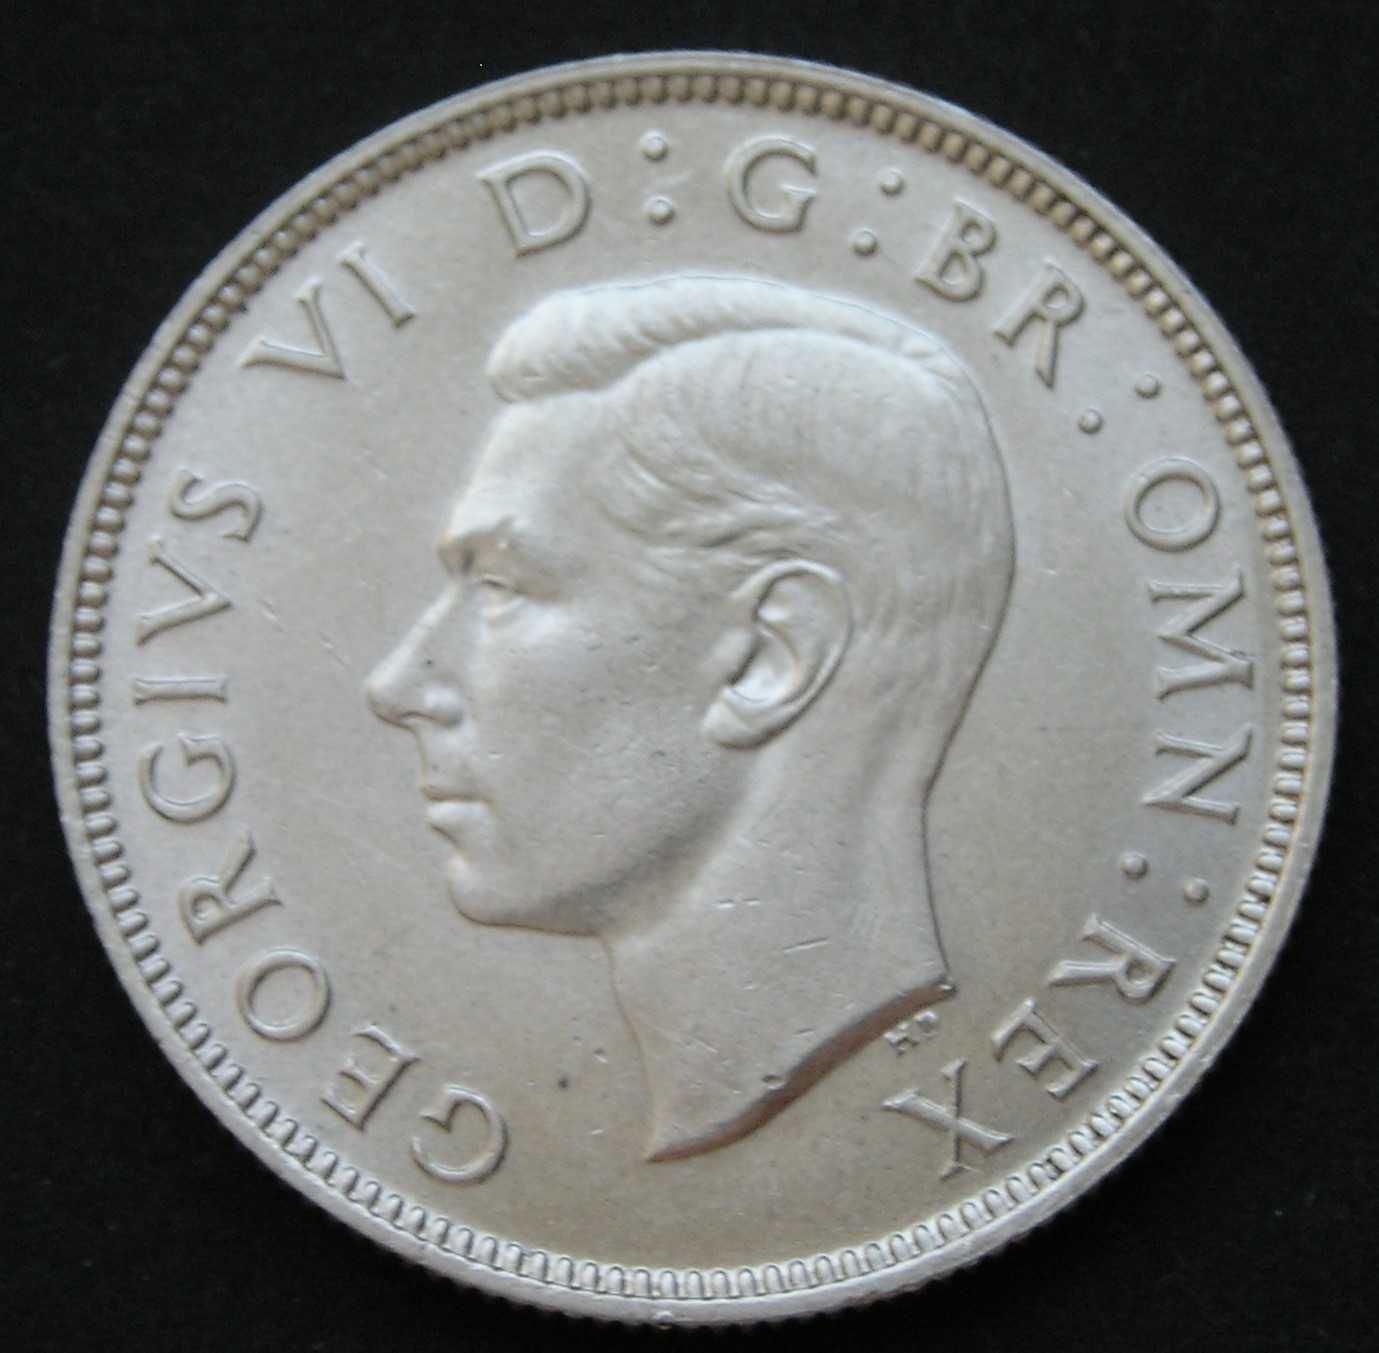 Wielka Brytania 2 shilling 1937 - król Jerzy VI - srebro - stan 1 -